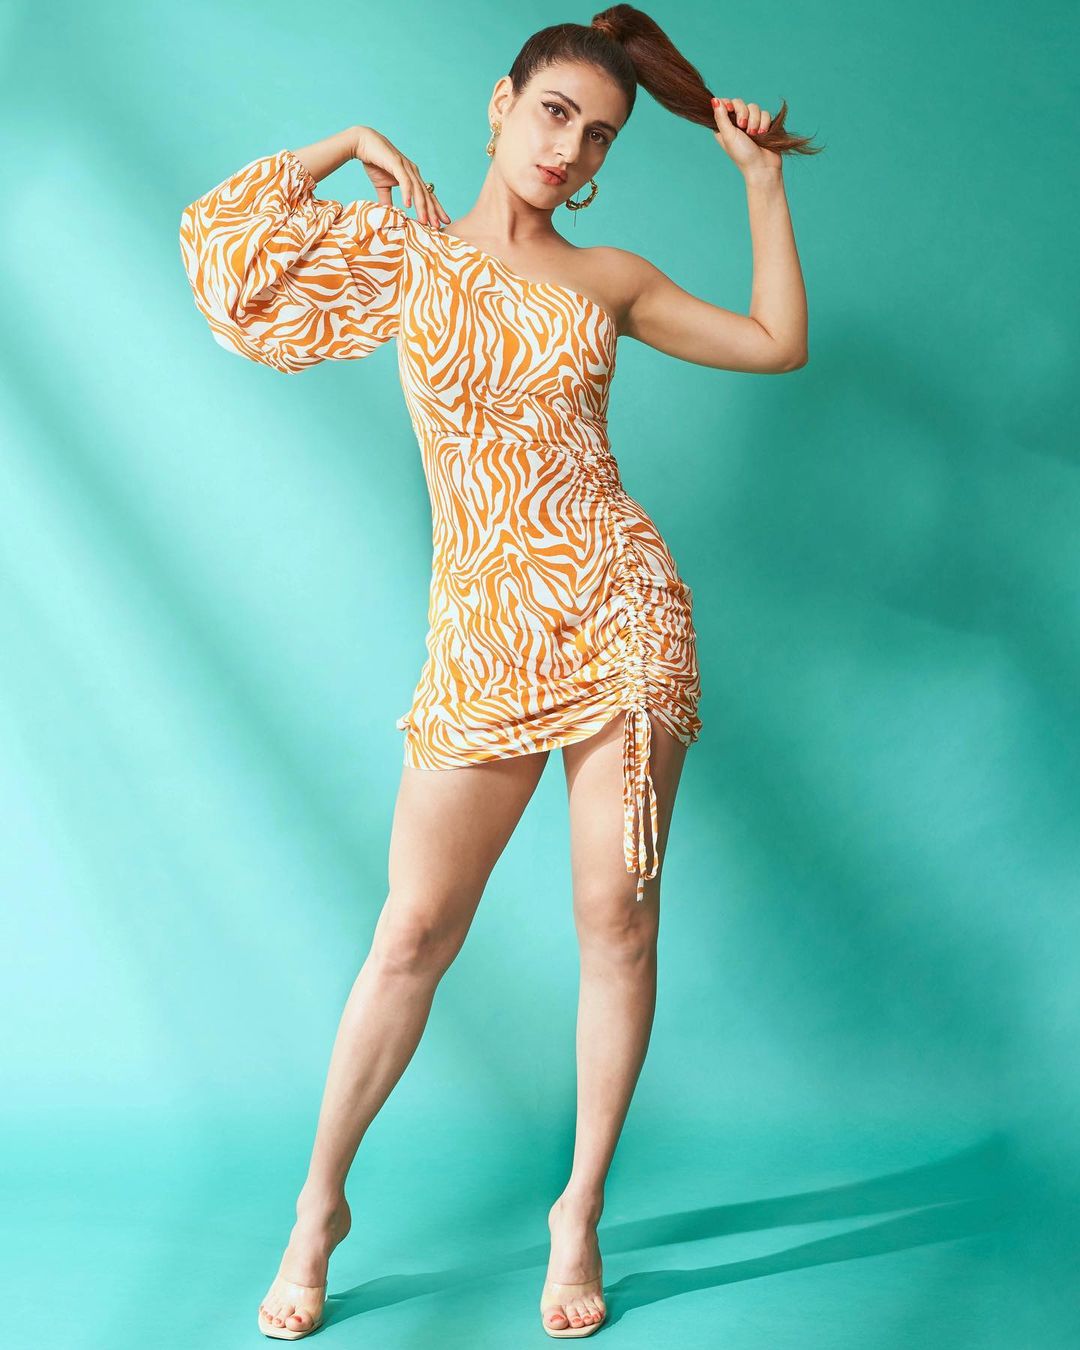 Fatima Sana Shaikh is giving summer fashion goals in an orange asymmetrical dress